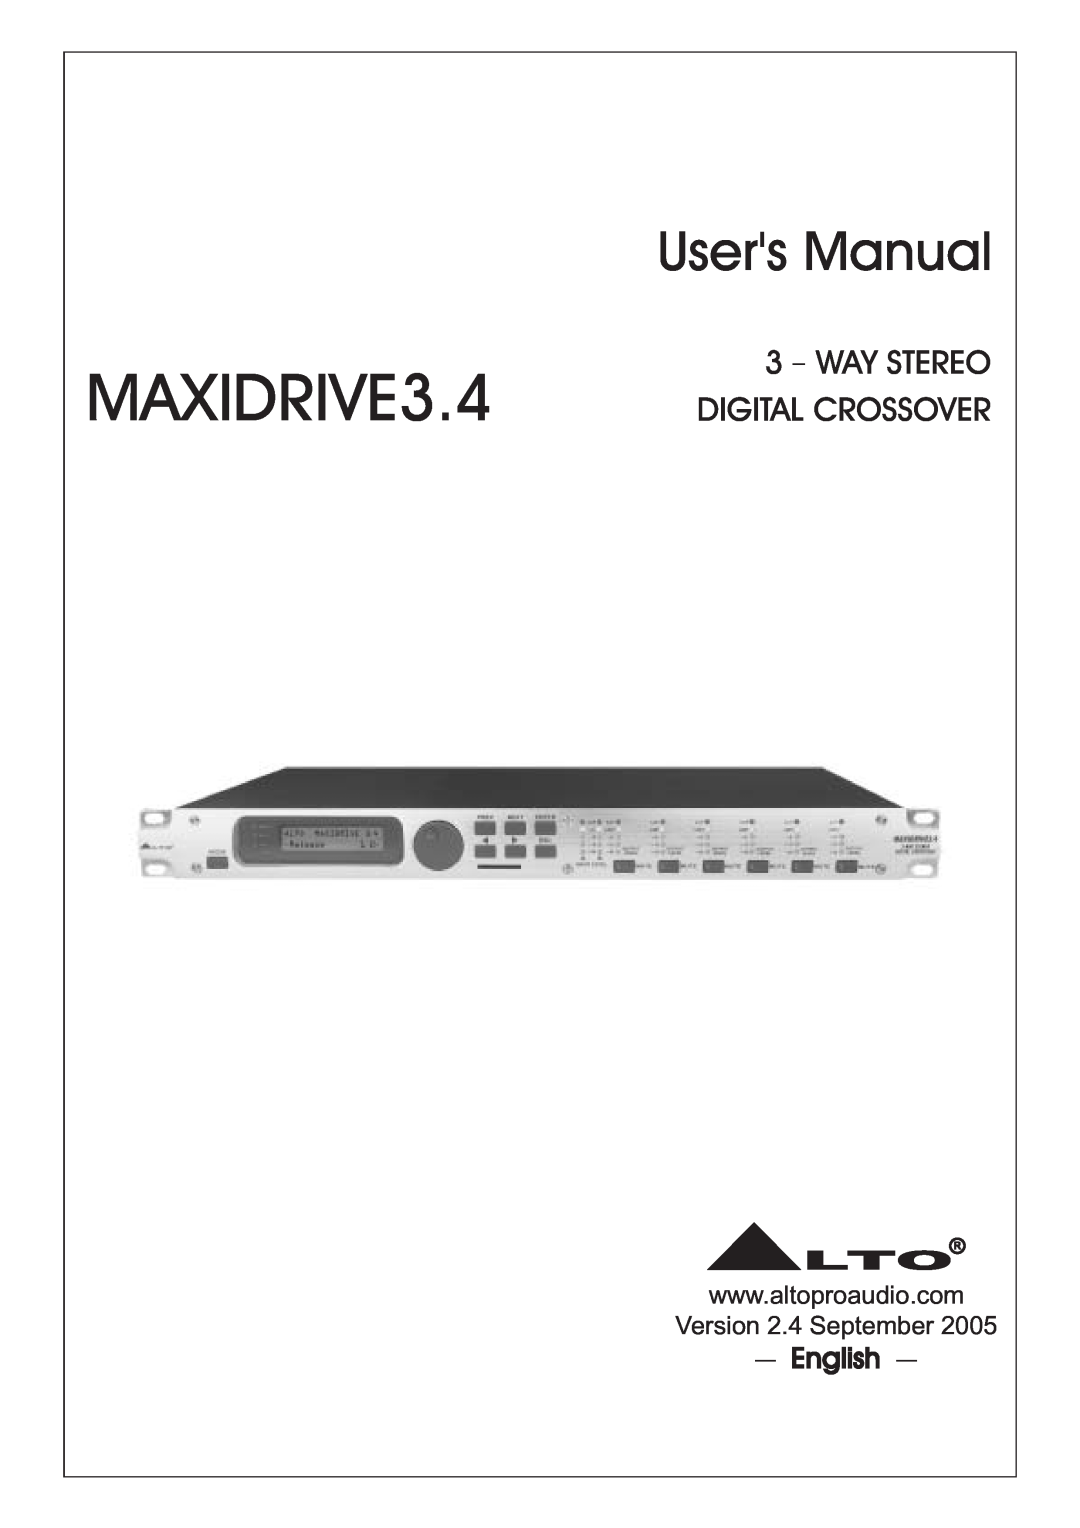 Nilfisk-ALTO user manual MAXIDRIVE3.4, Digital Crossover, English, Way Stereo 